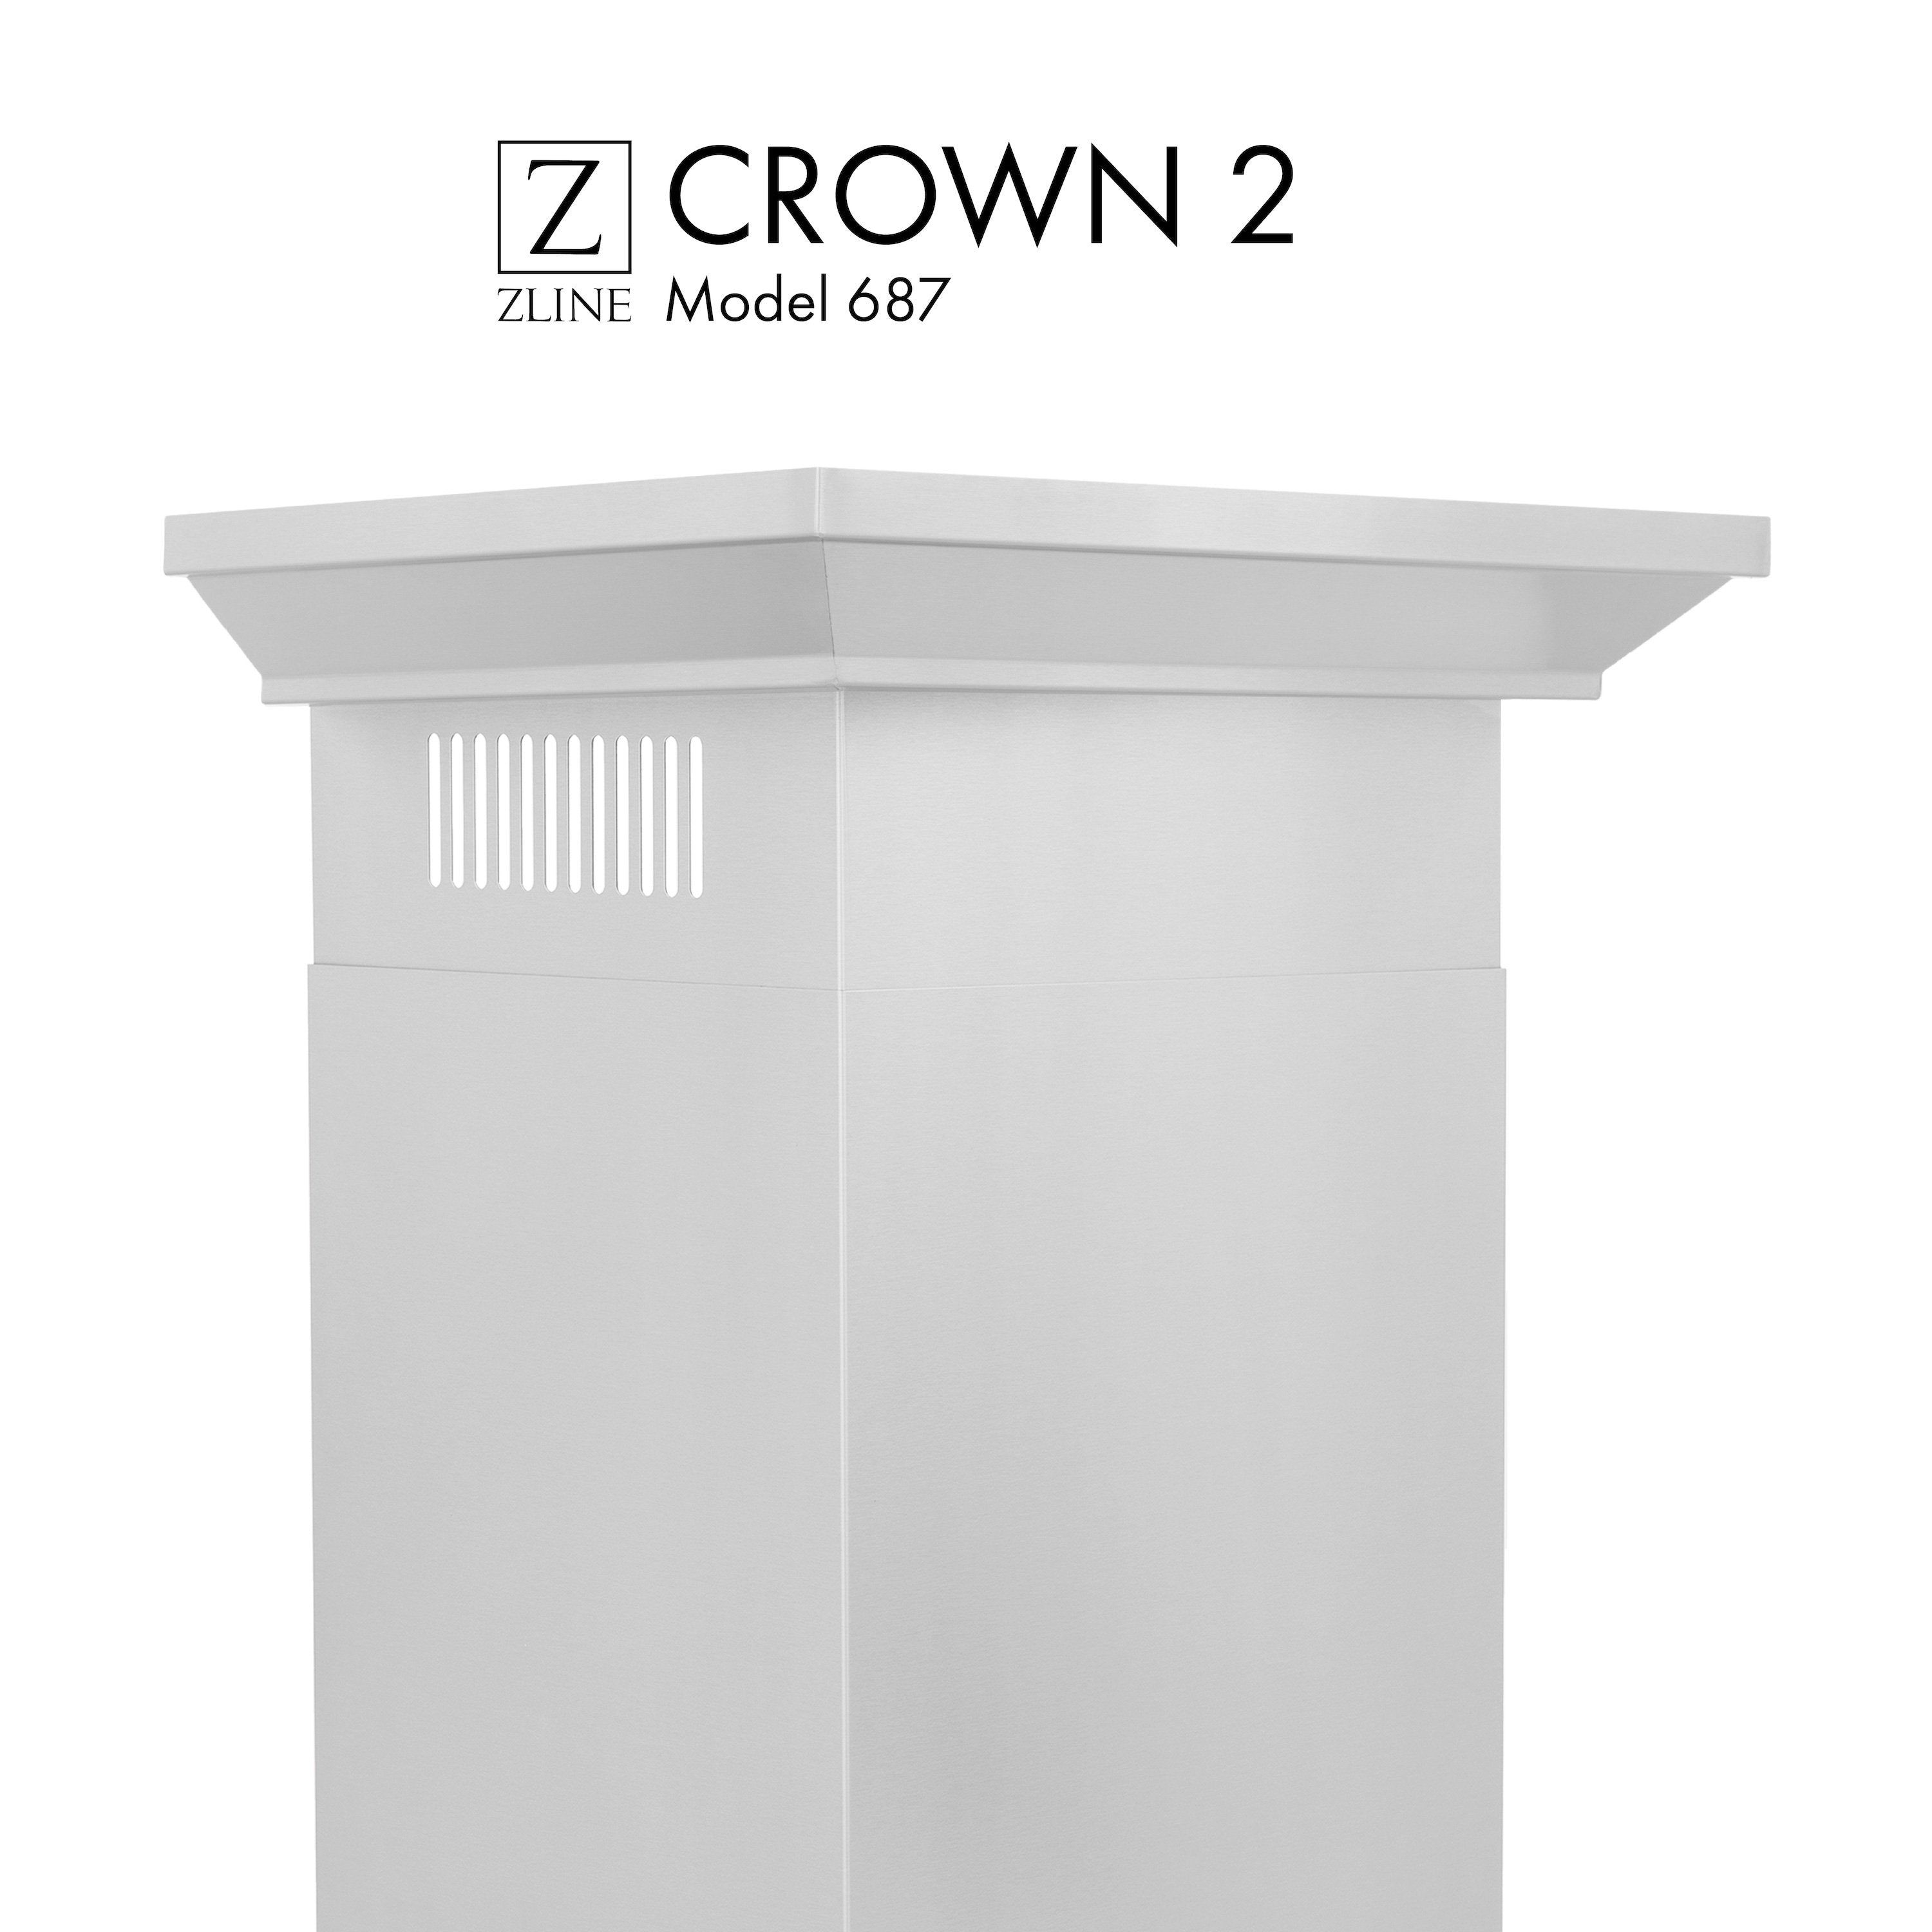 ZLINE Crown Molding Profile 2 for Wall Mount Range Hood (CM2-687)